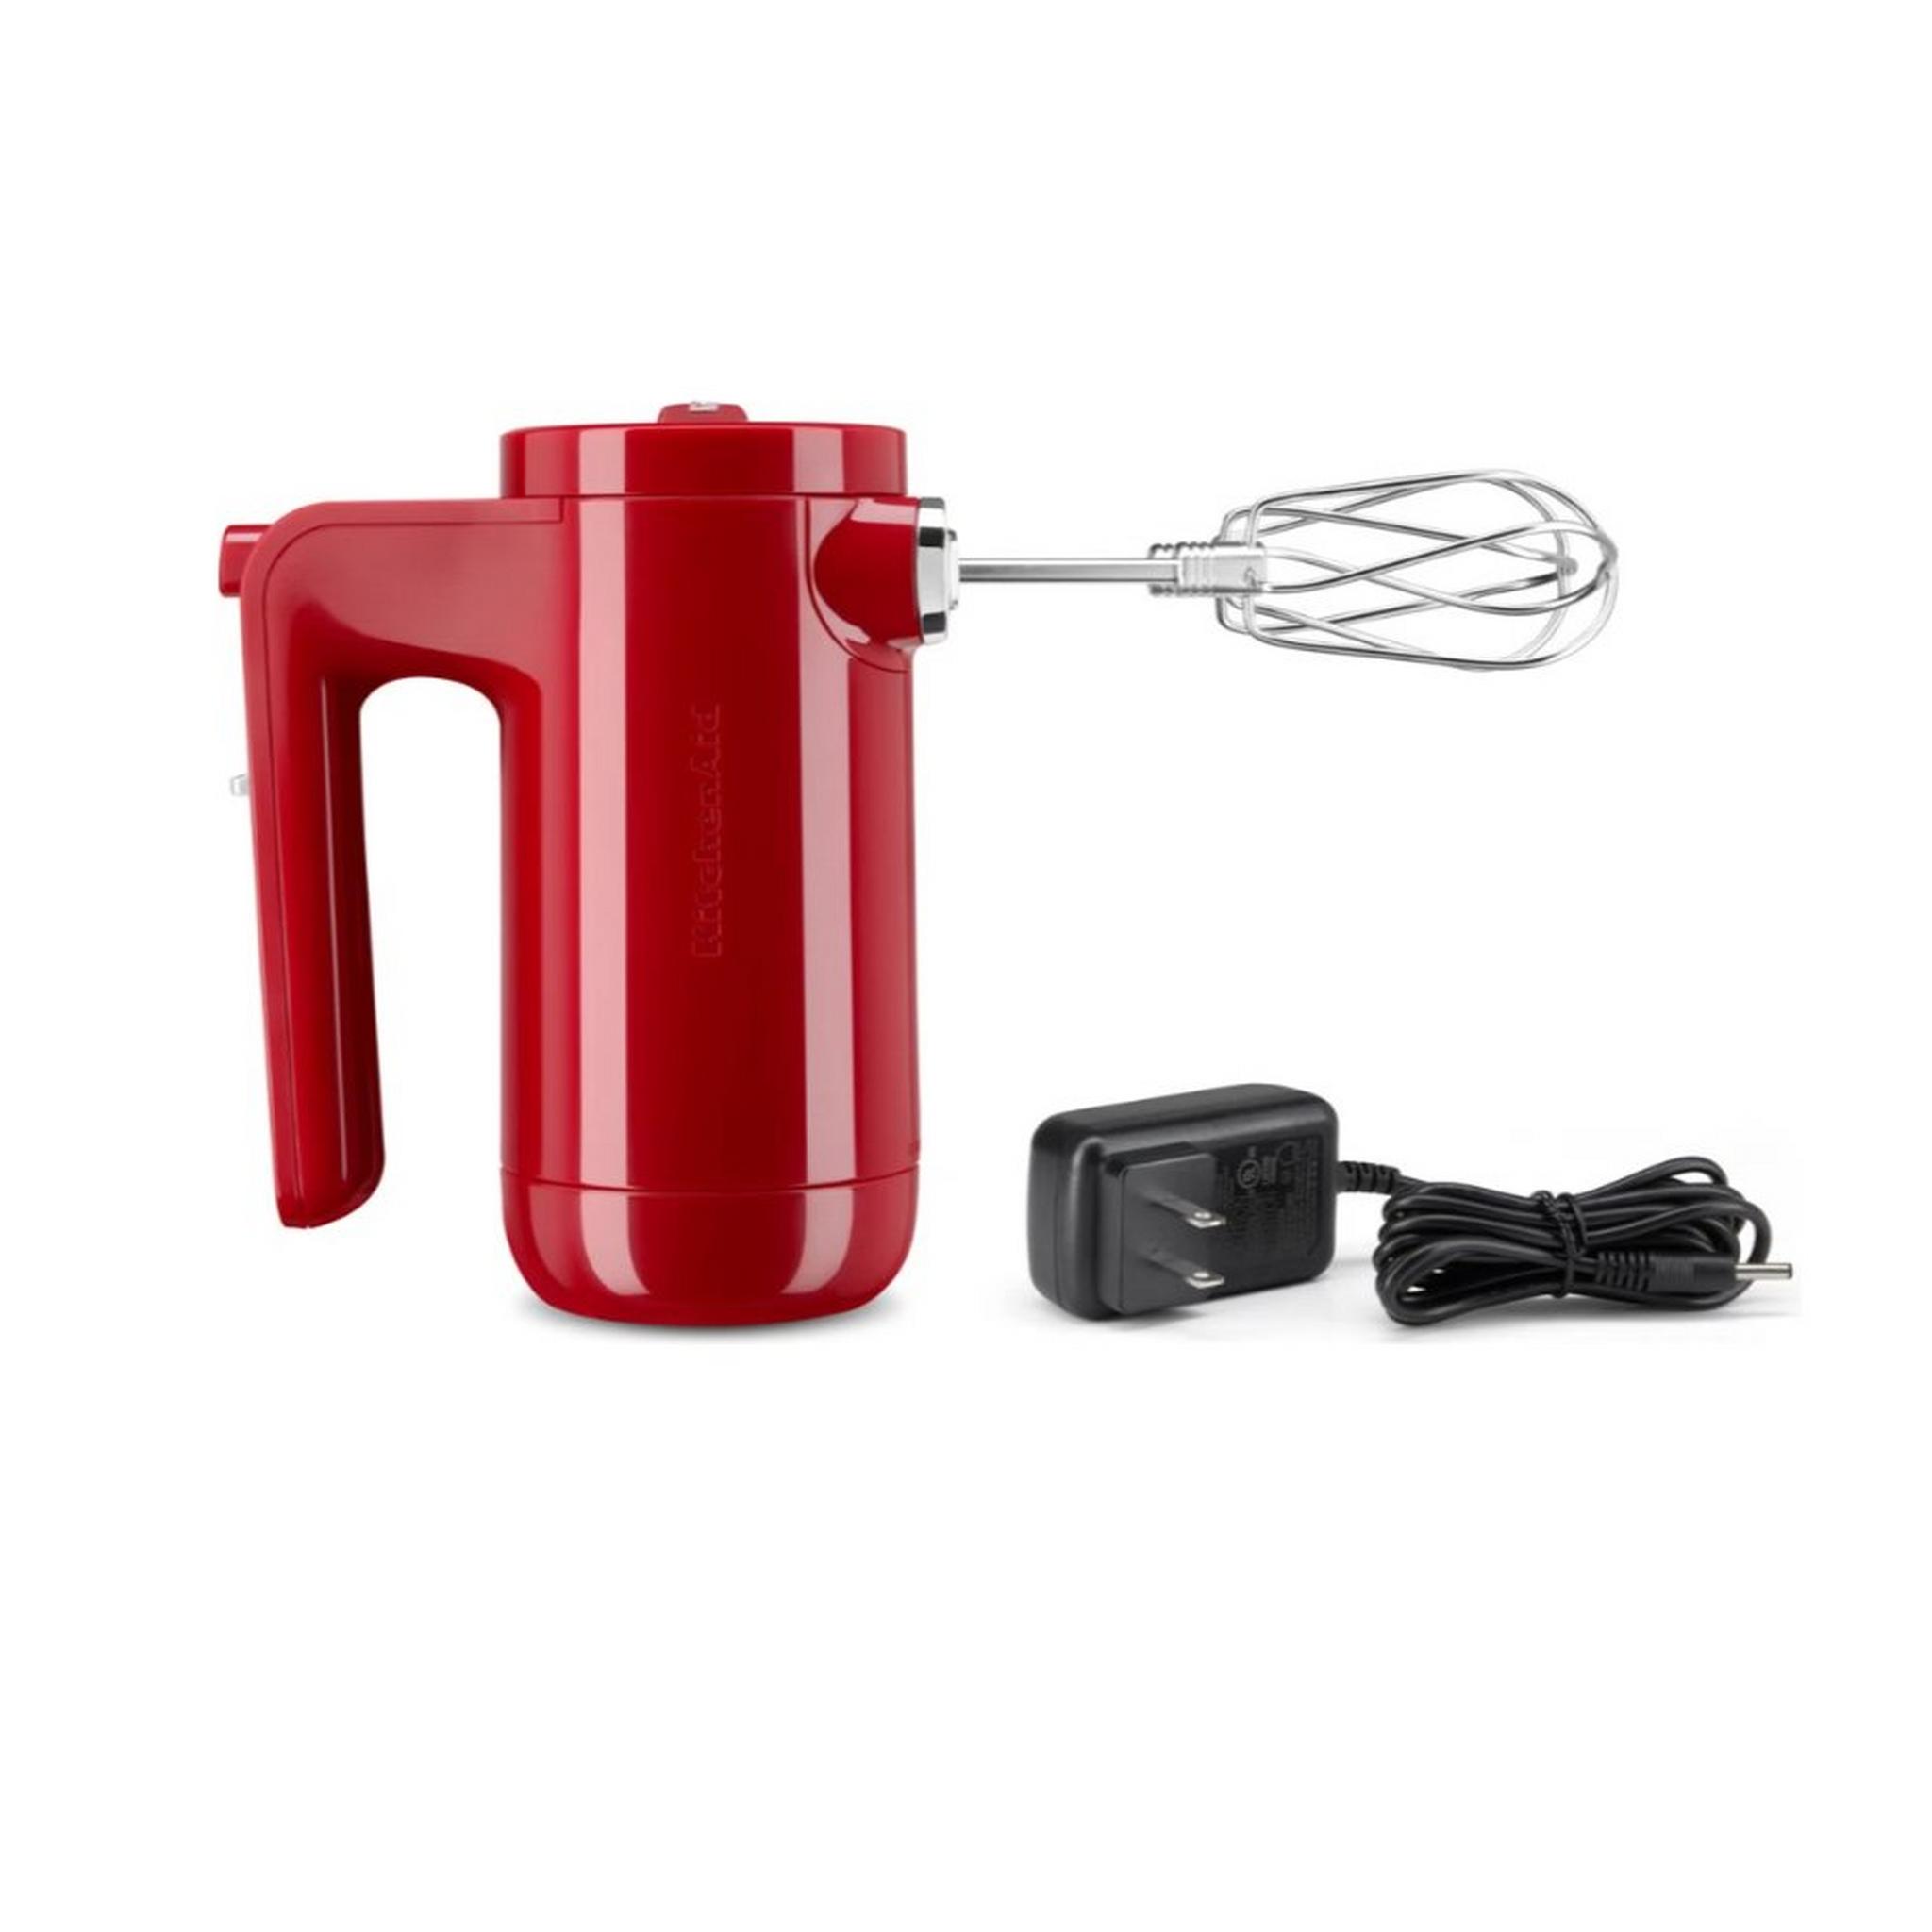 KitchenAid  Cordless Hand Mixer, 7 Speed, 5KHMB732BER - Red